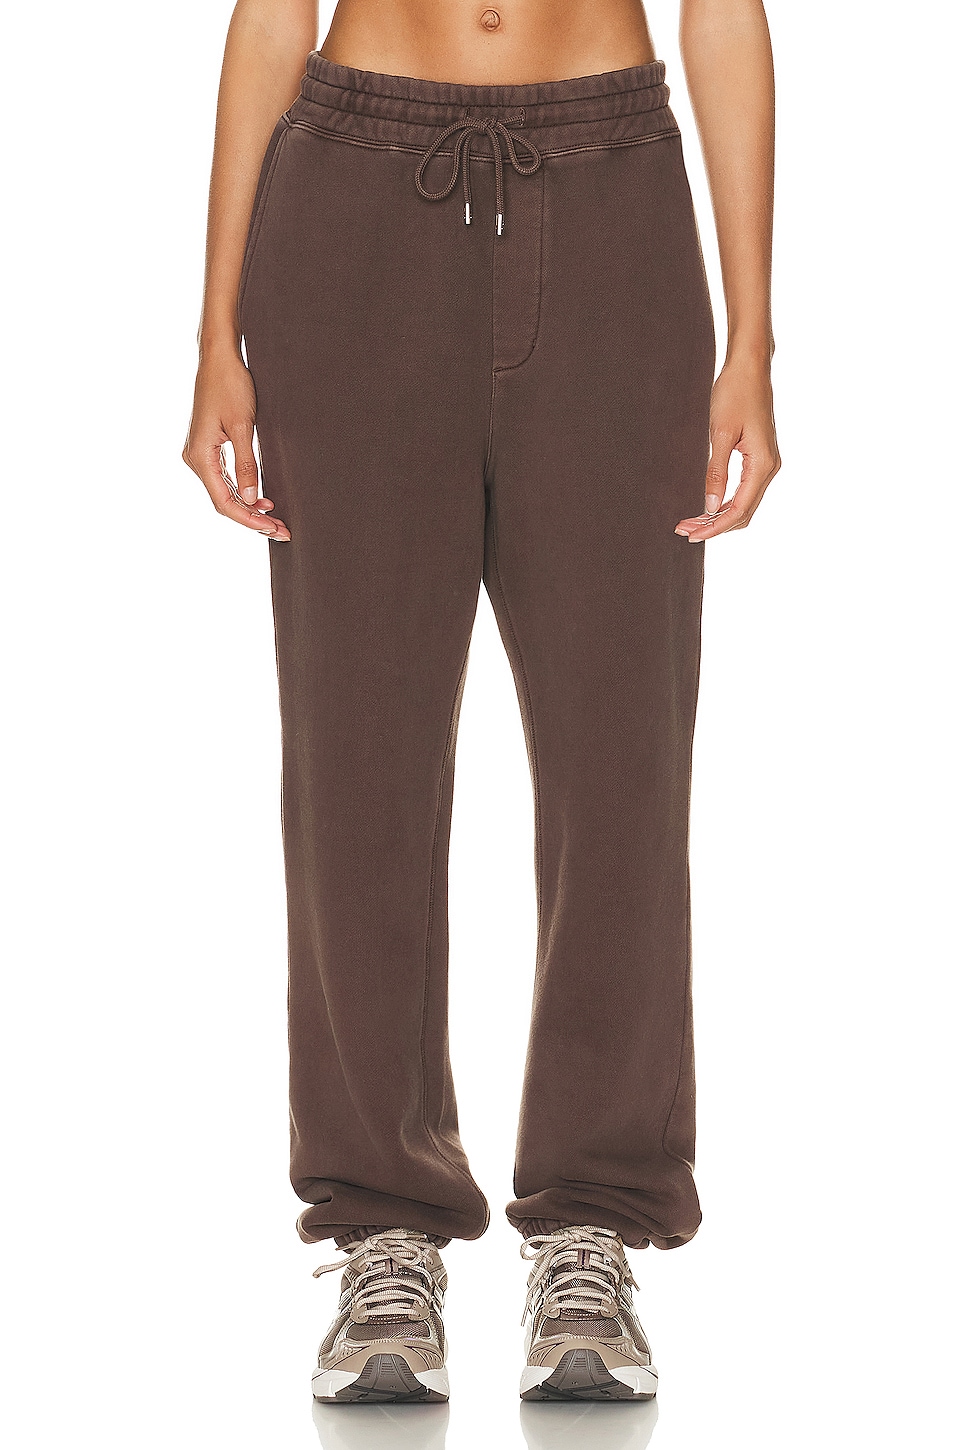 Image 1 of WAO The Fleece Pant in brown